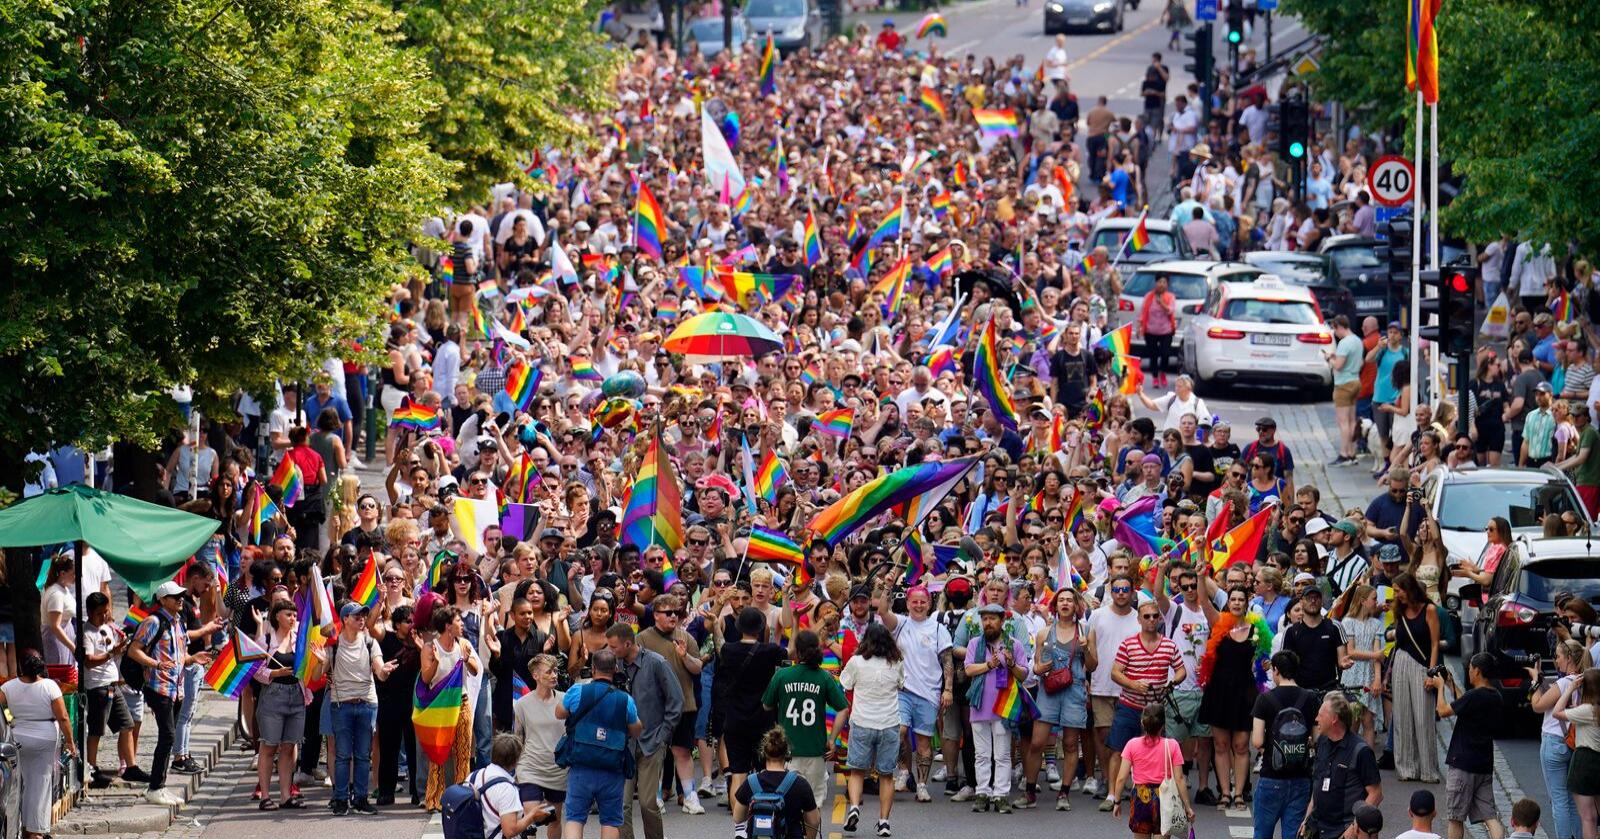 Oslo 26. juni: En gruppe går i tog etter at Oslo Pride avlyste årets tog etter anbefaling fra politiet. Foto: Håkon Mosvold Larsen / NTB